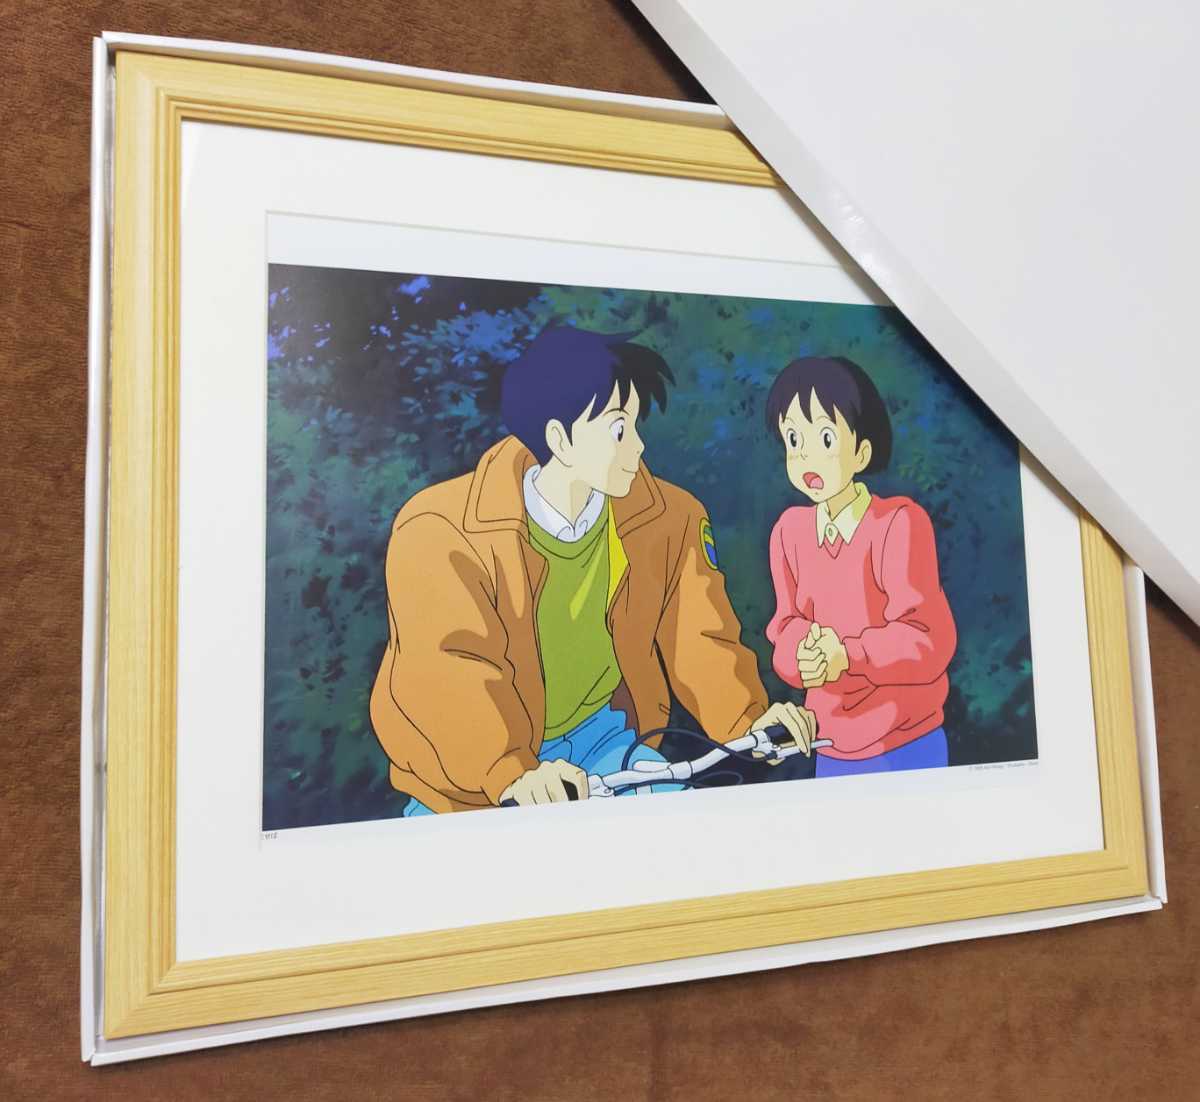 Студия Ghibli.Шепчите на уши [Предмет в рамке] Плакат Ghibli.Осмотр) Картина Ghibli.Репродукция оригинальной открытки.Календарь Ghibli.Хаяо Миядзаки GHIBLI, комиксы, аниме товары, другие